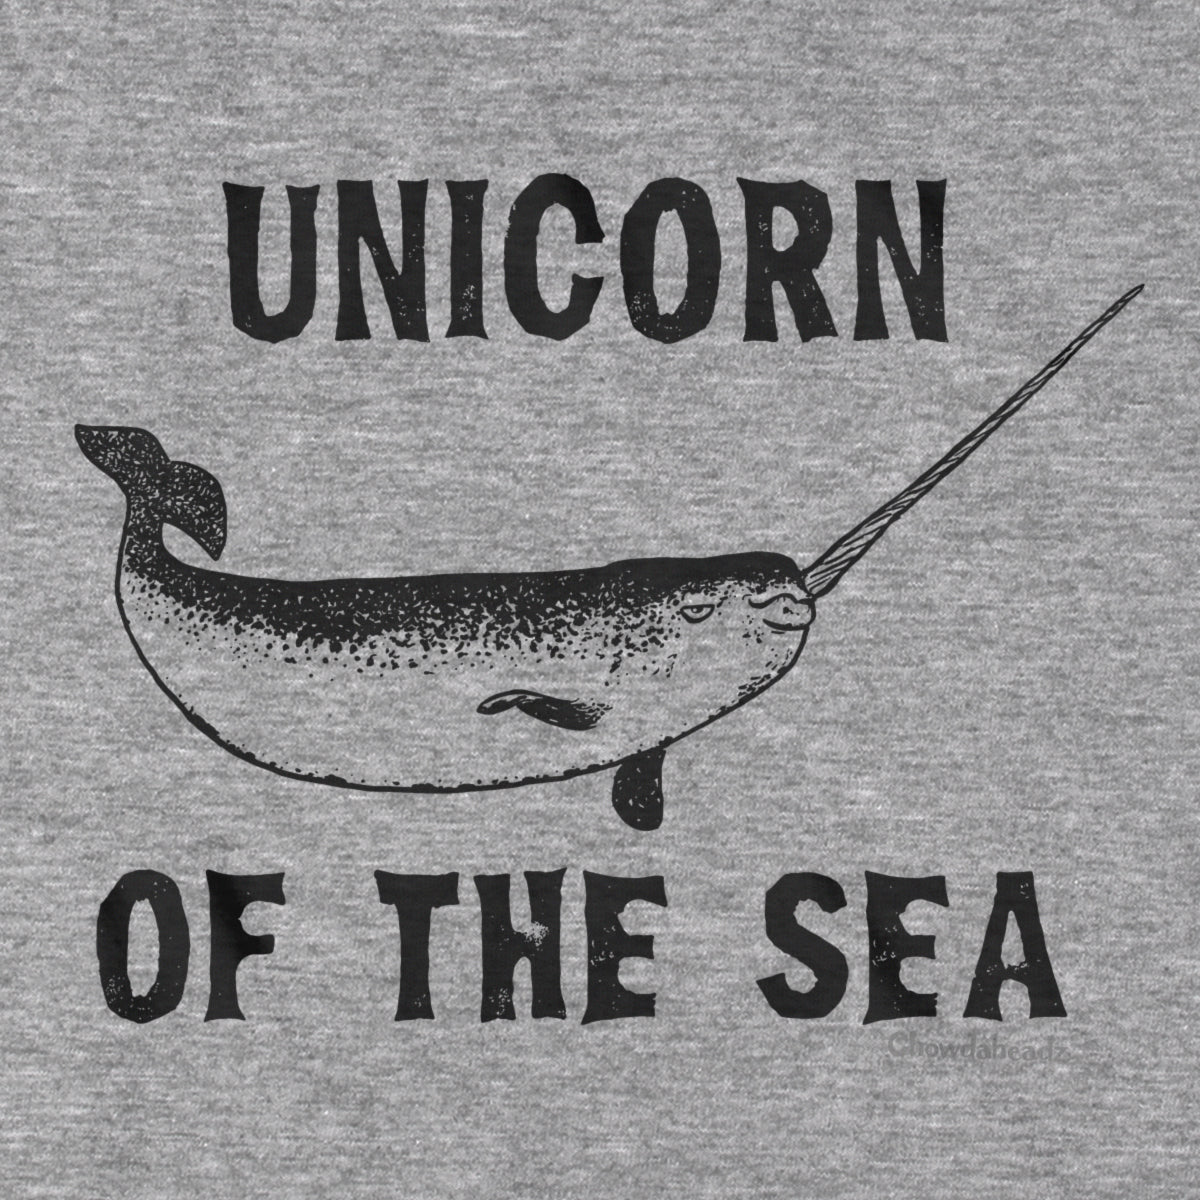 Unicorn Of The Sea T-Shirt - Chowdaheadz